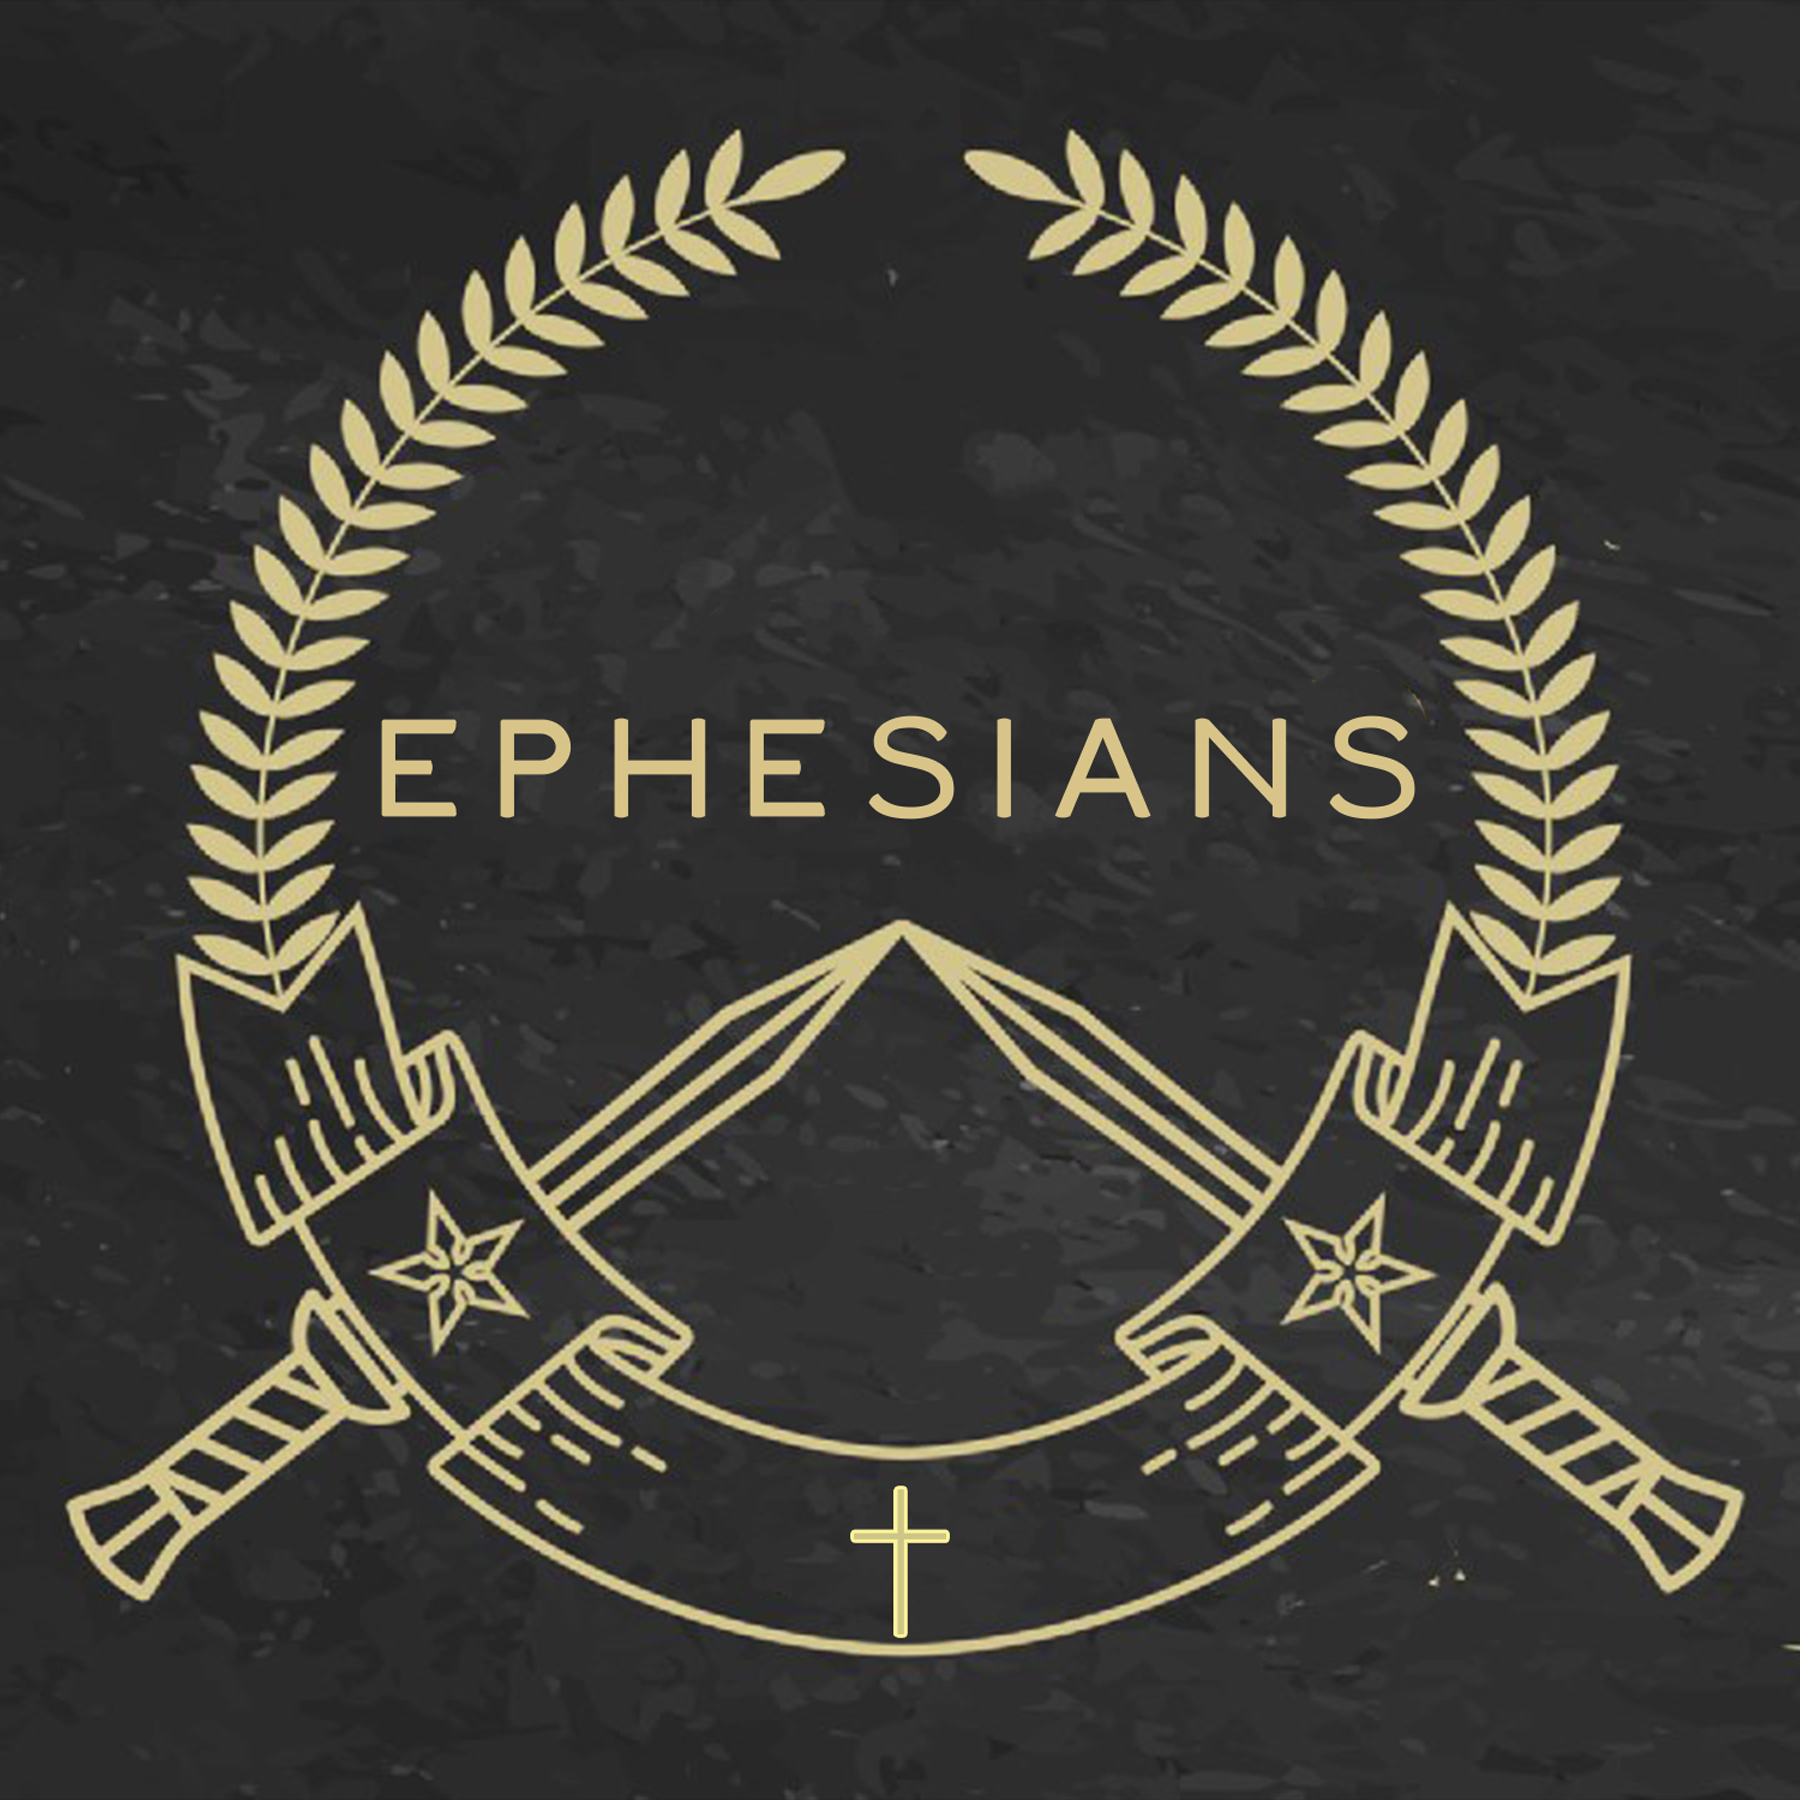 Ephesians Episode 5 - Let's Get Serious